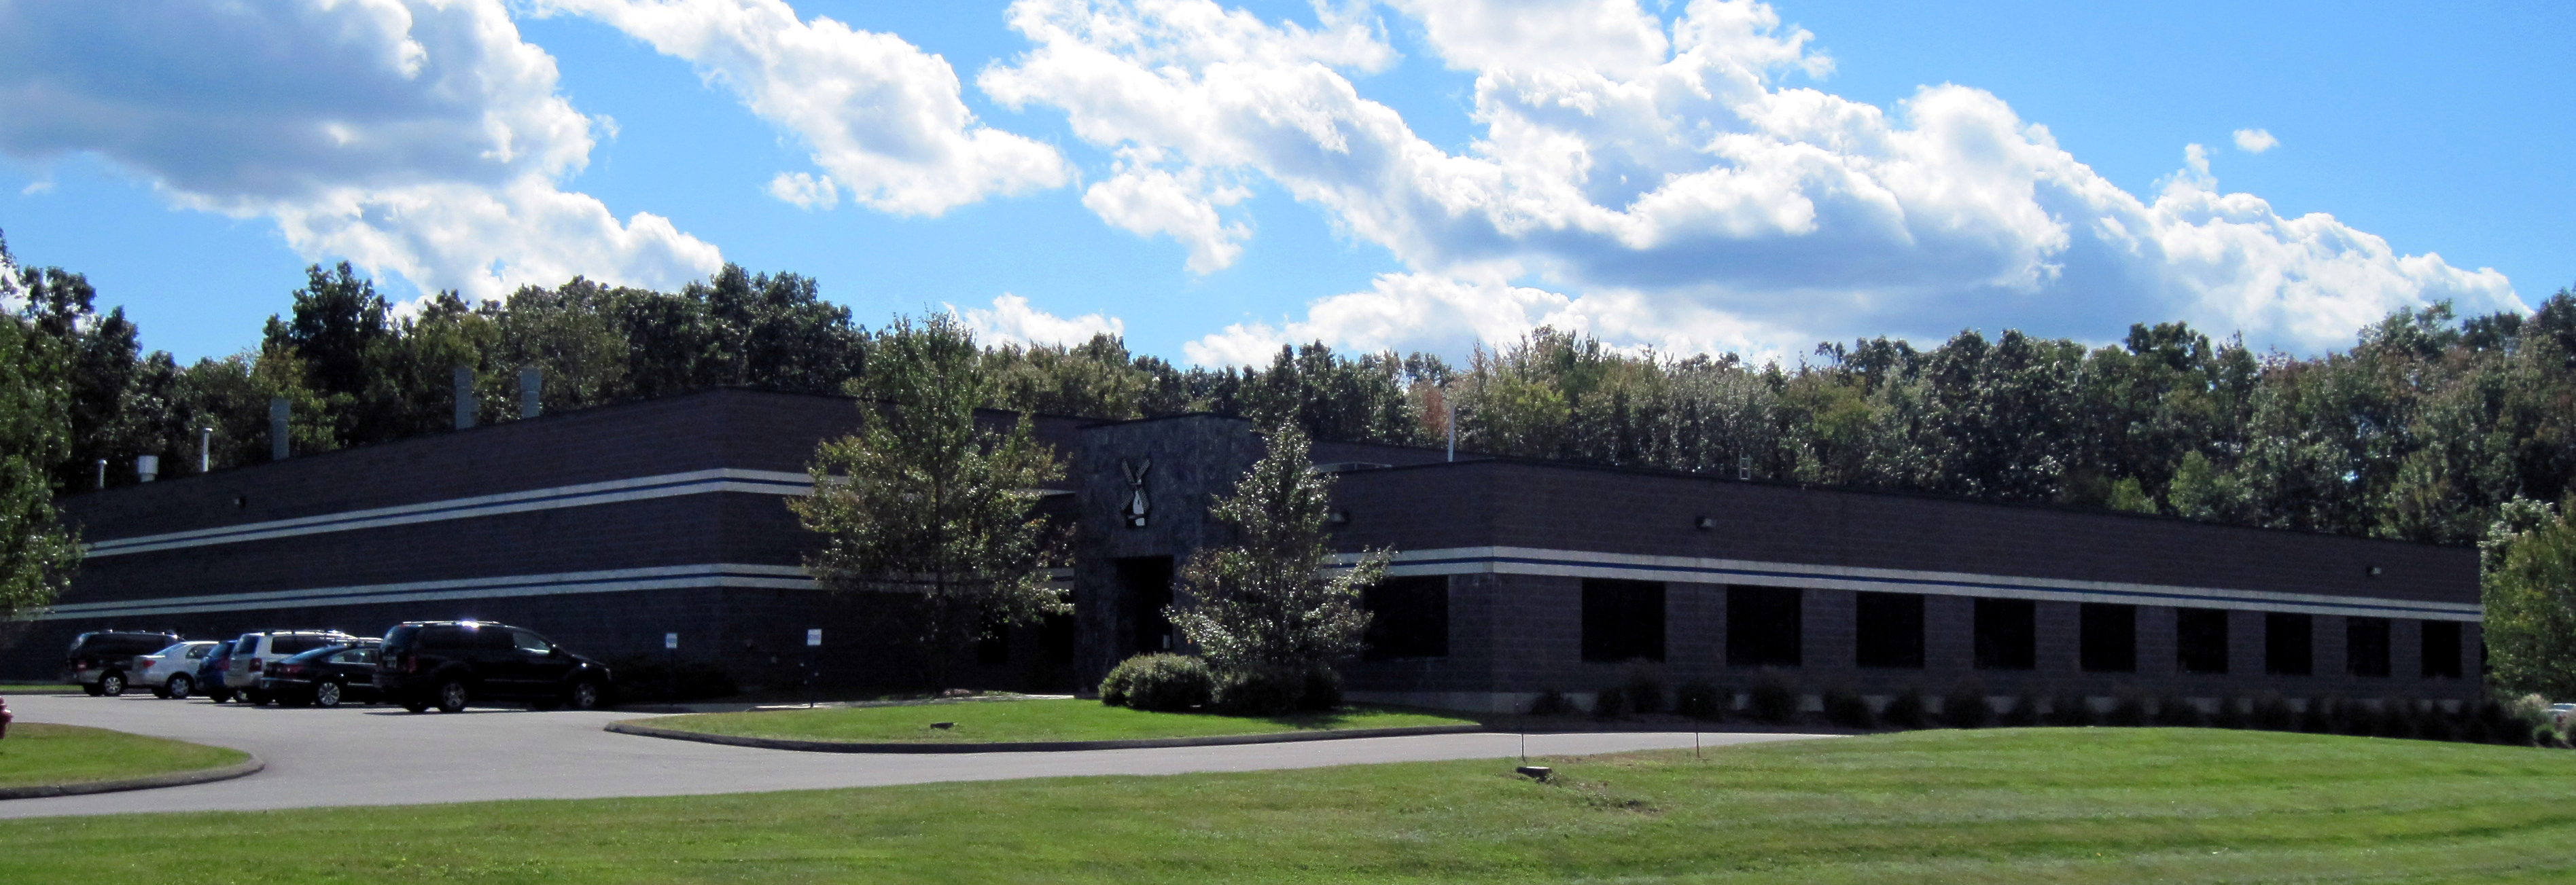 Wind Hardware & Engineering Headquarters - Newtown, CT